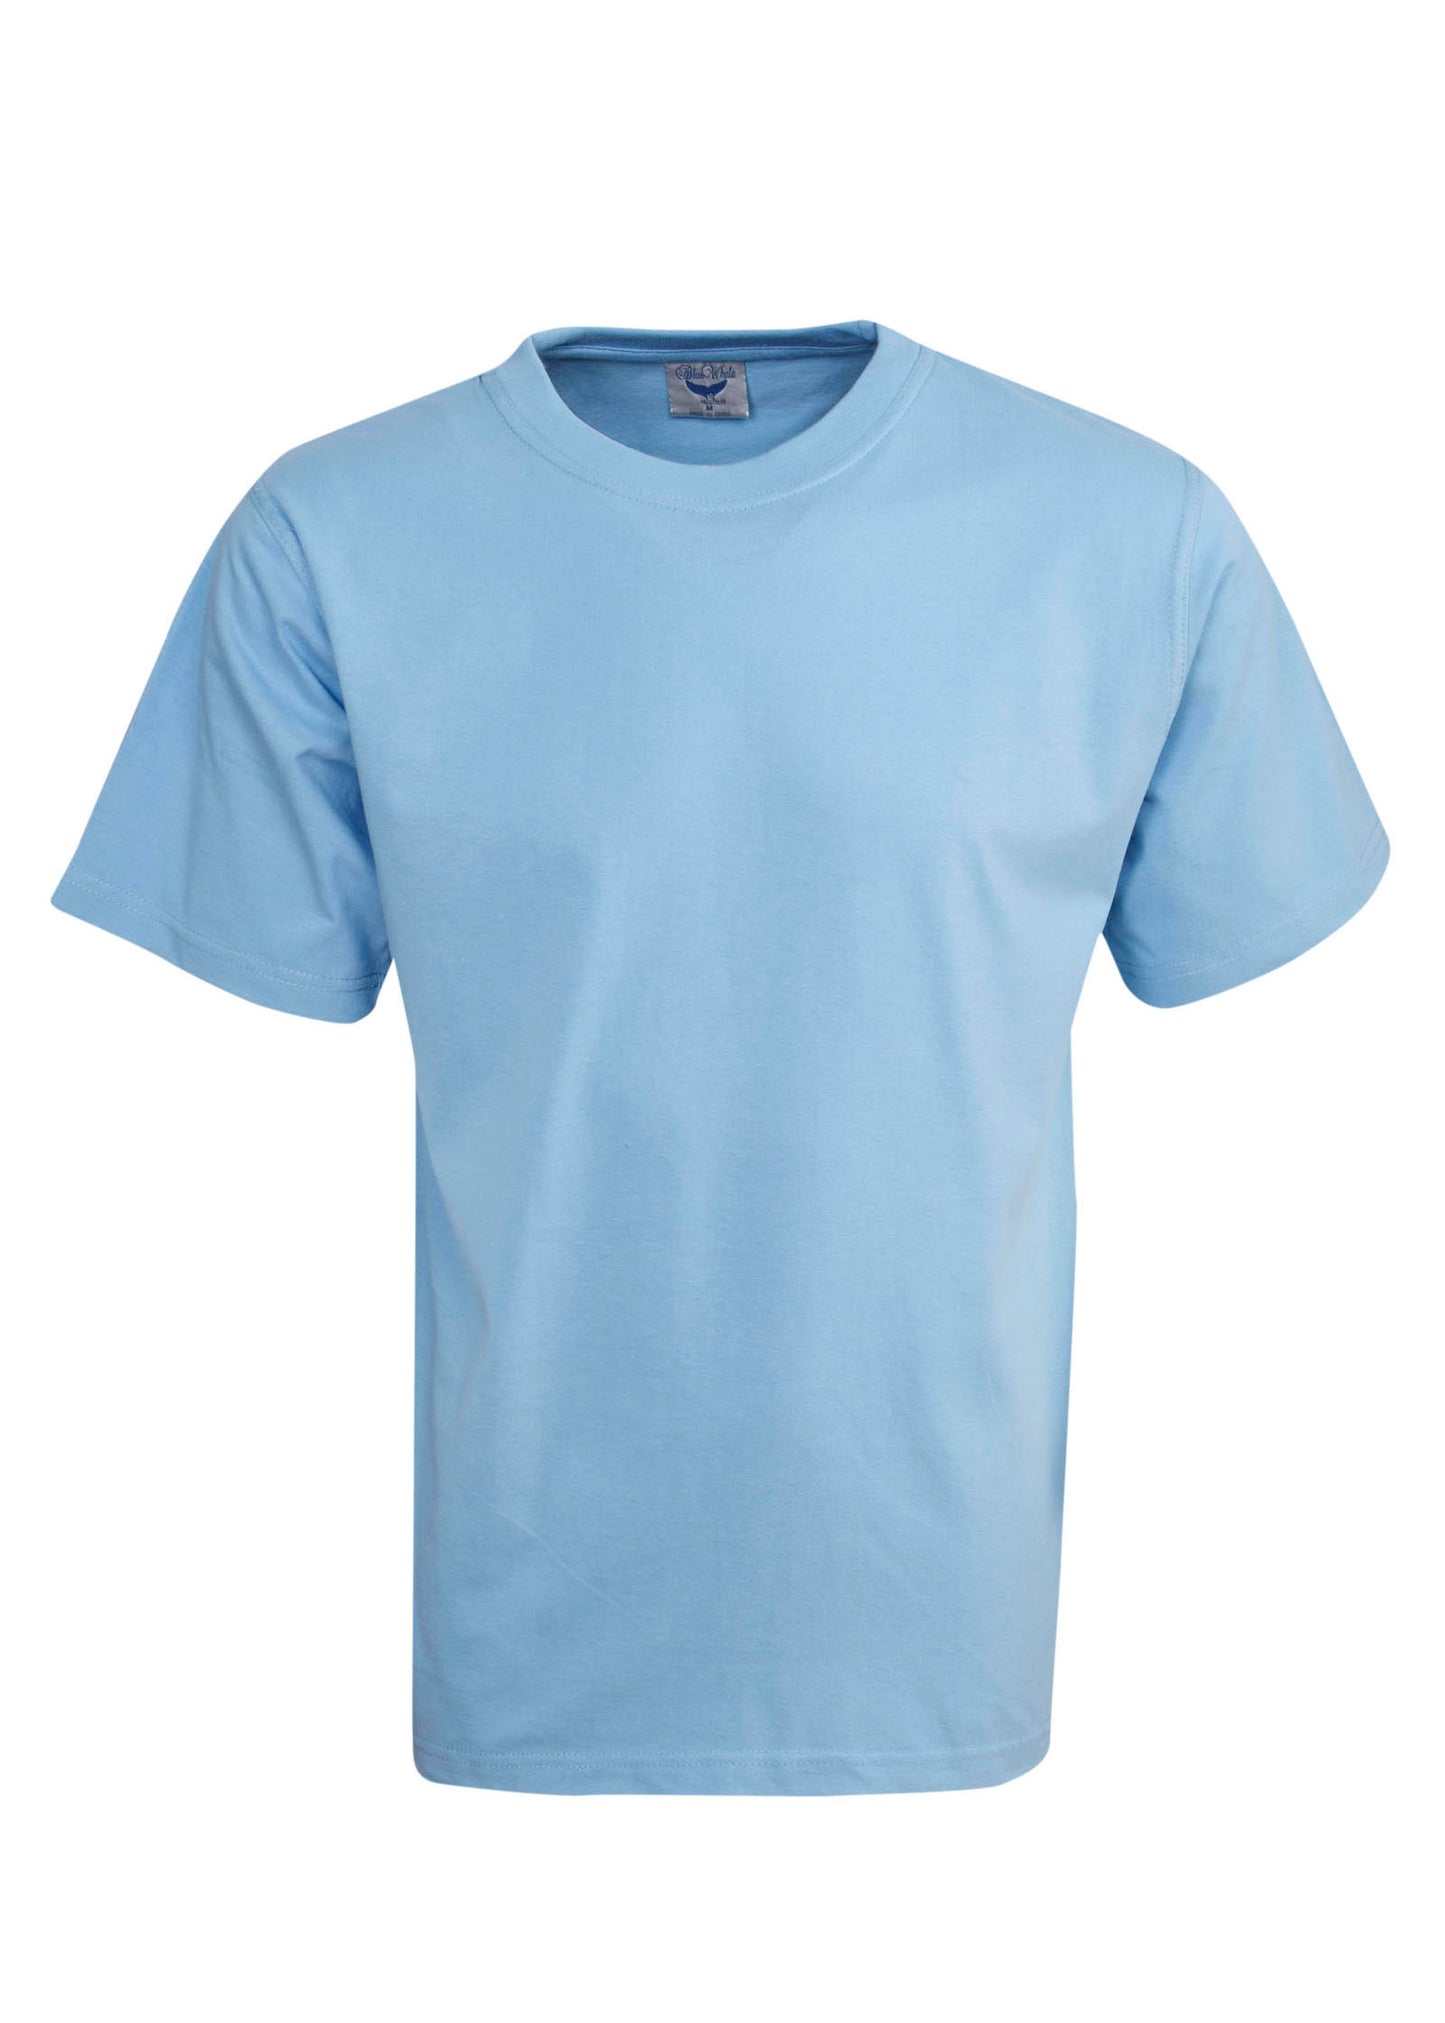 Blue Whale Kids Premium Pre-Shrunk Cotton T-Shirt